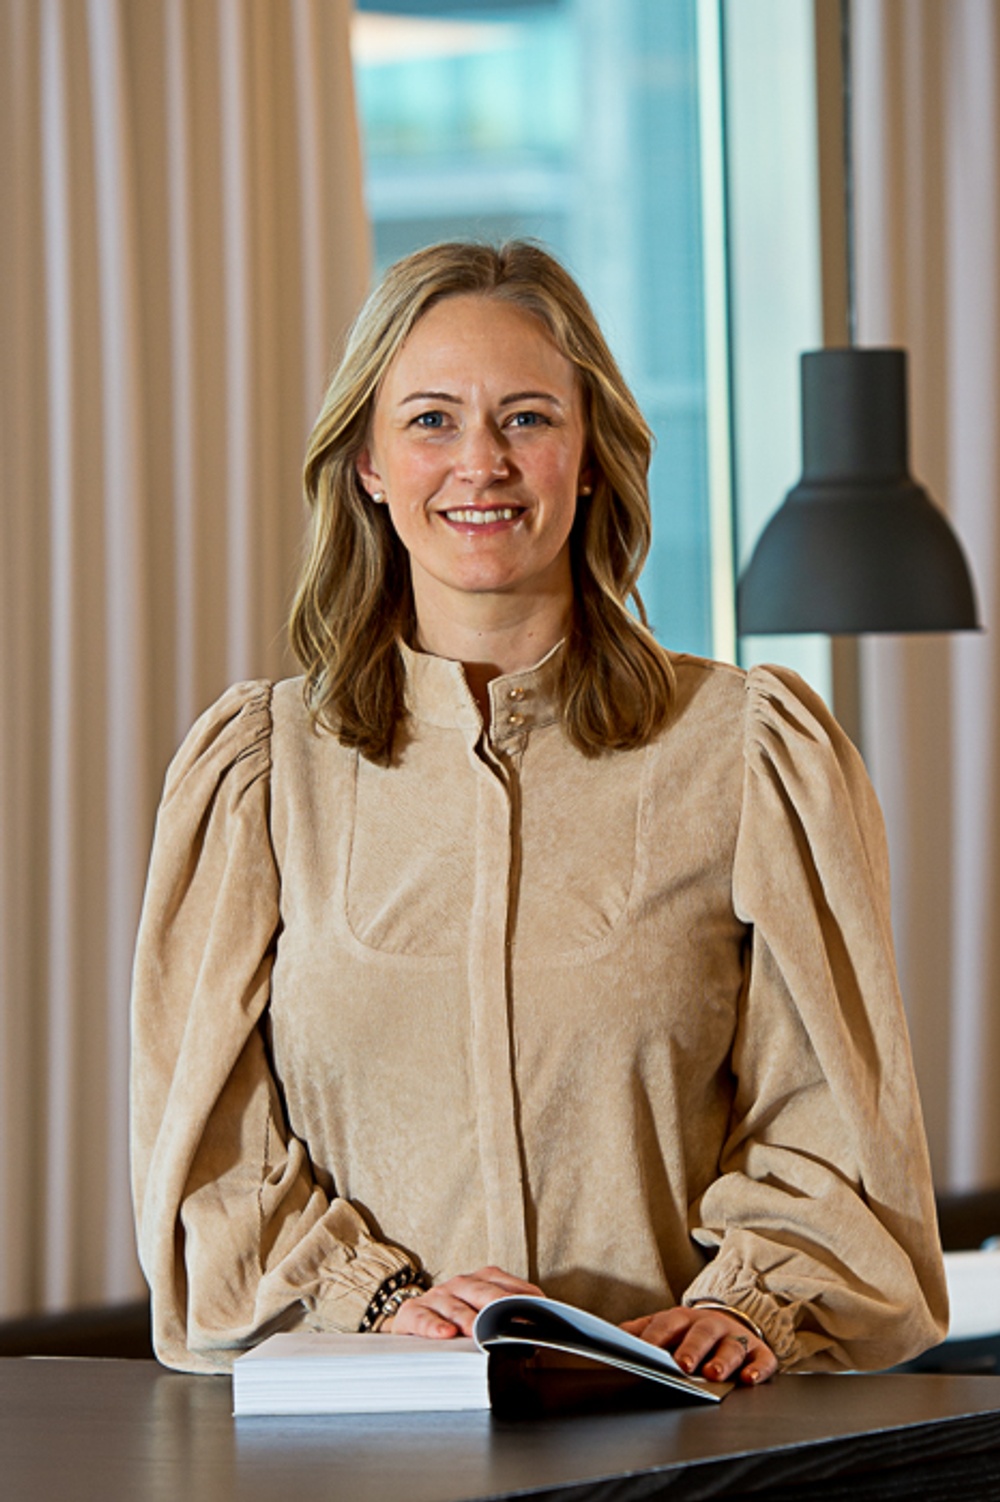 Ikano Bostads kommunikationschef Charlotte Kjellberg. 